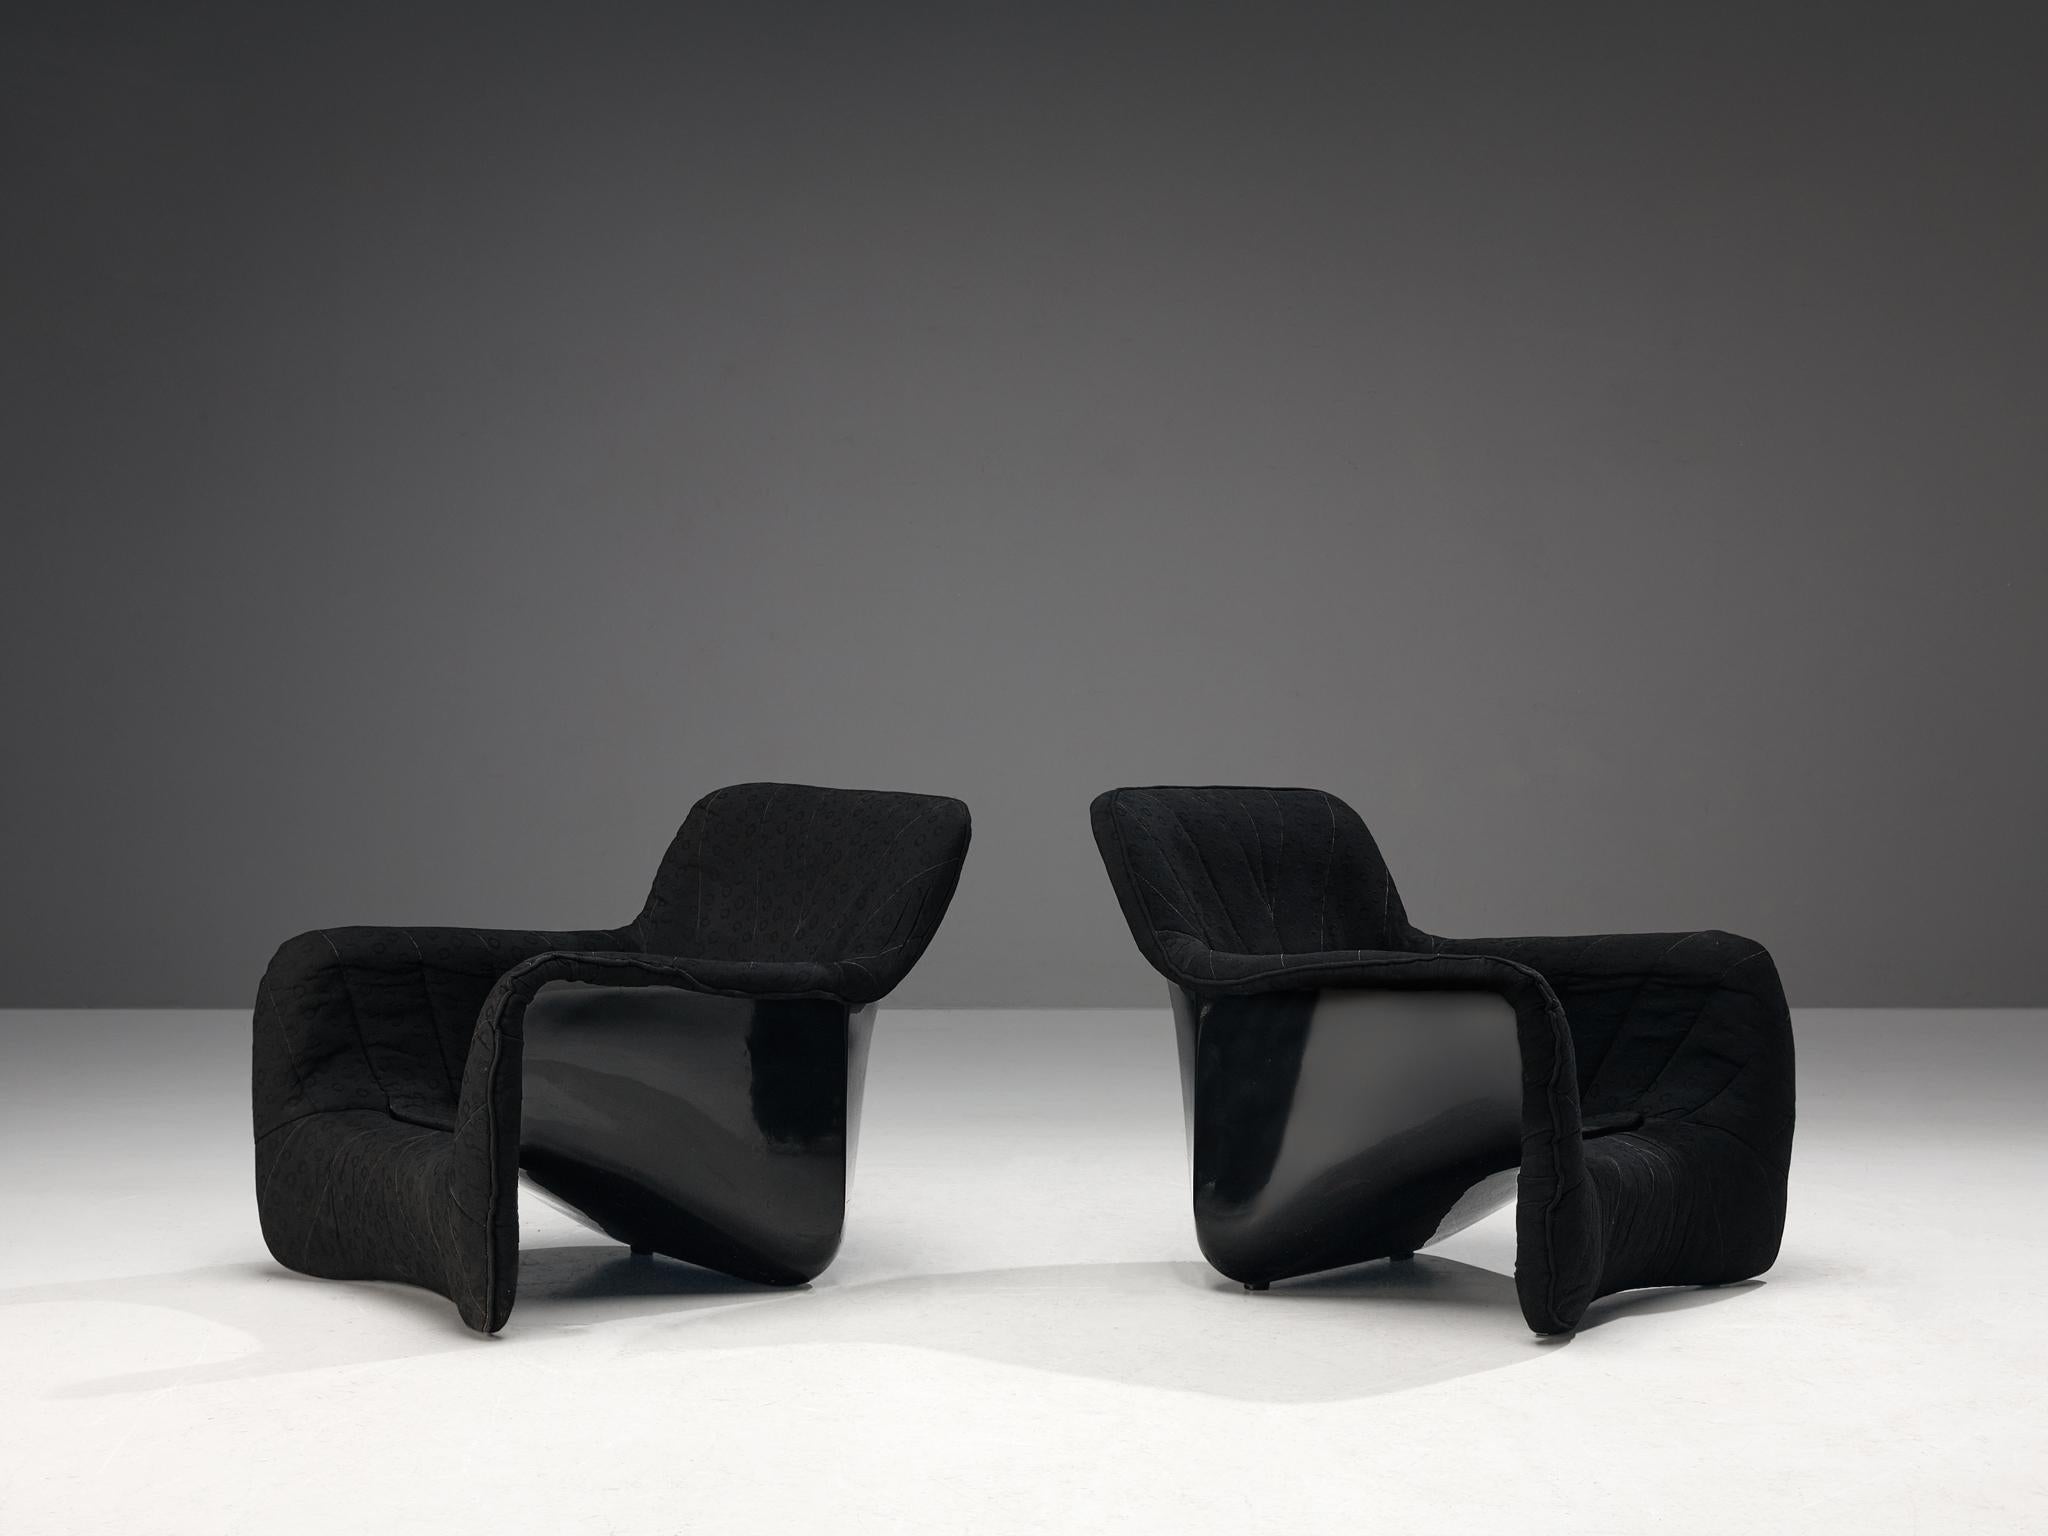 Carlo Bartoli for Arflex, 'Bicia' lounge chairs, fiberglass, fabric, Italy, 1969

Pair of black fiberglass framed lounge chairs designed by Carlo Bartoli for Arflex in 1969. The flowing line of the black fiberglass back emphasize the elegance of